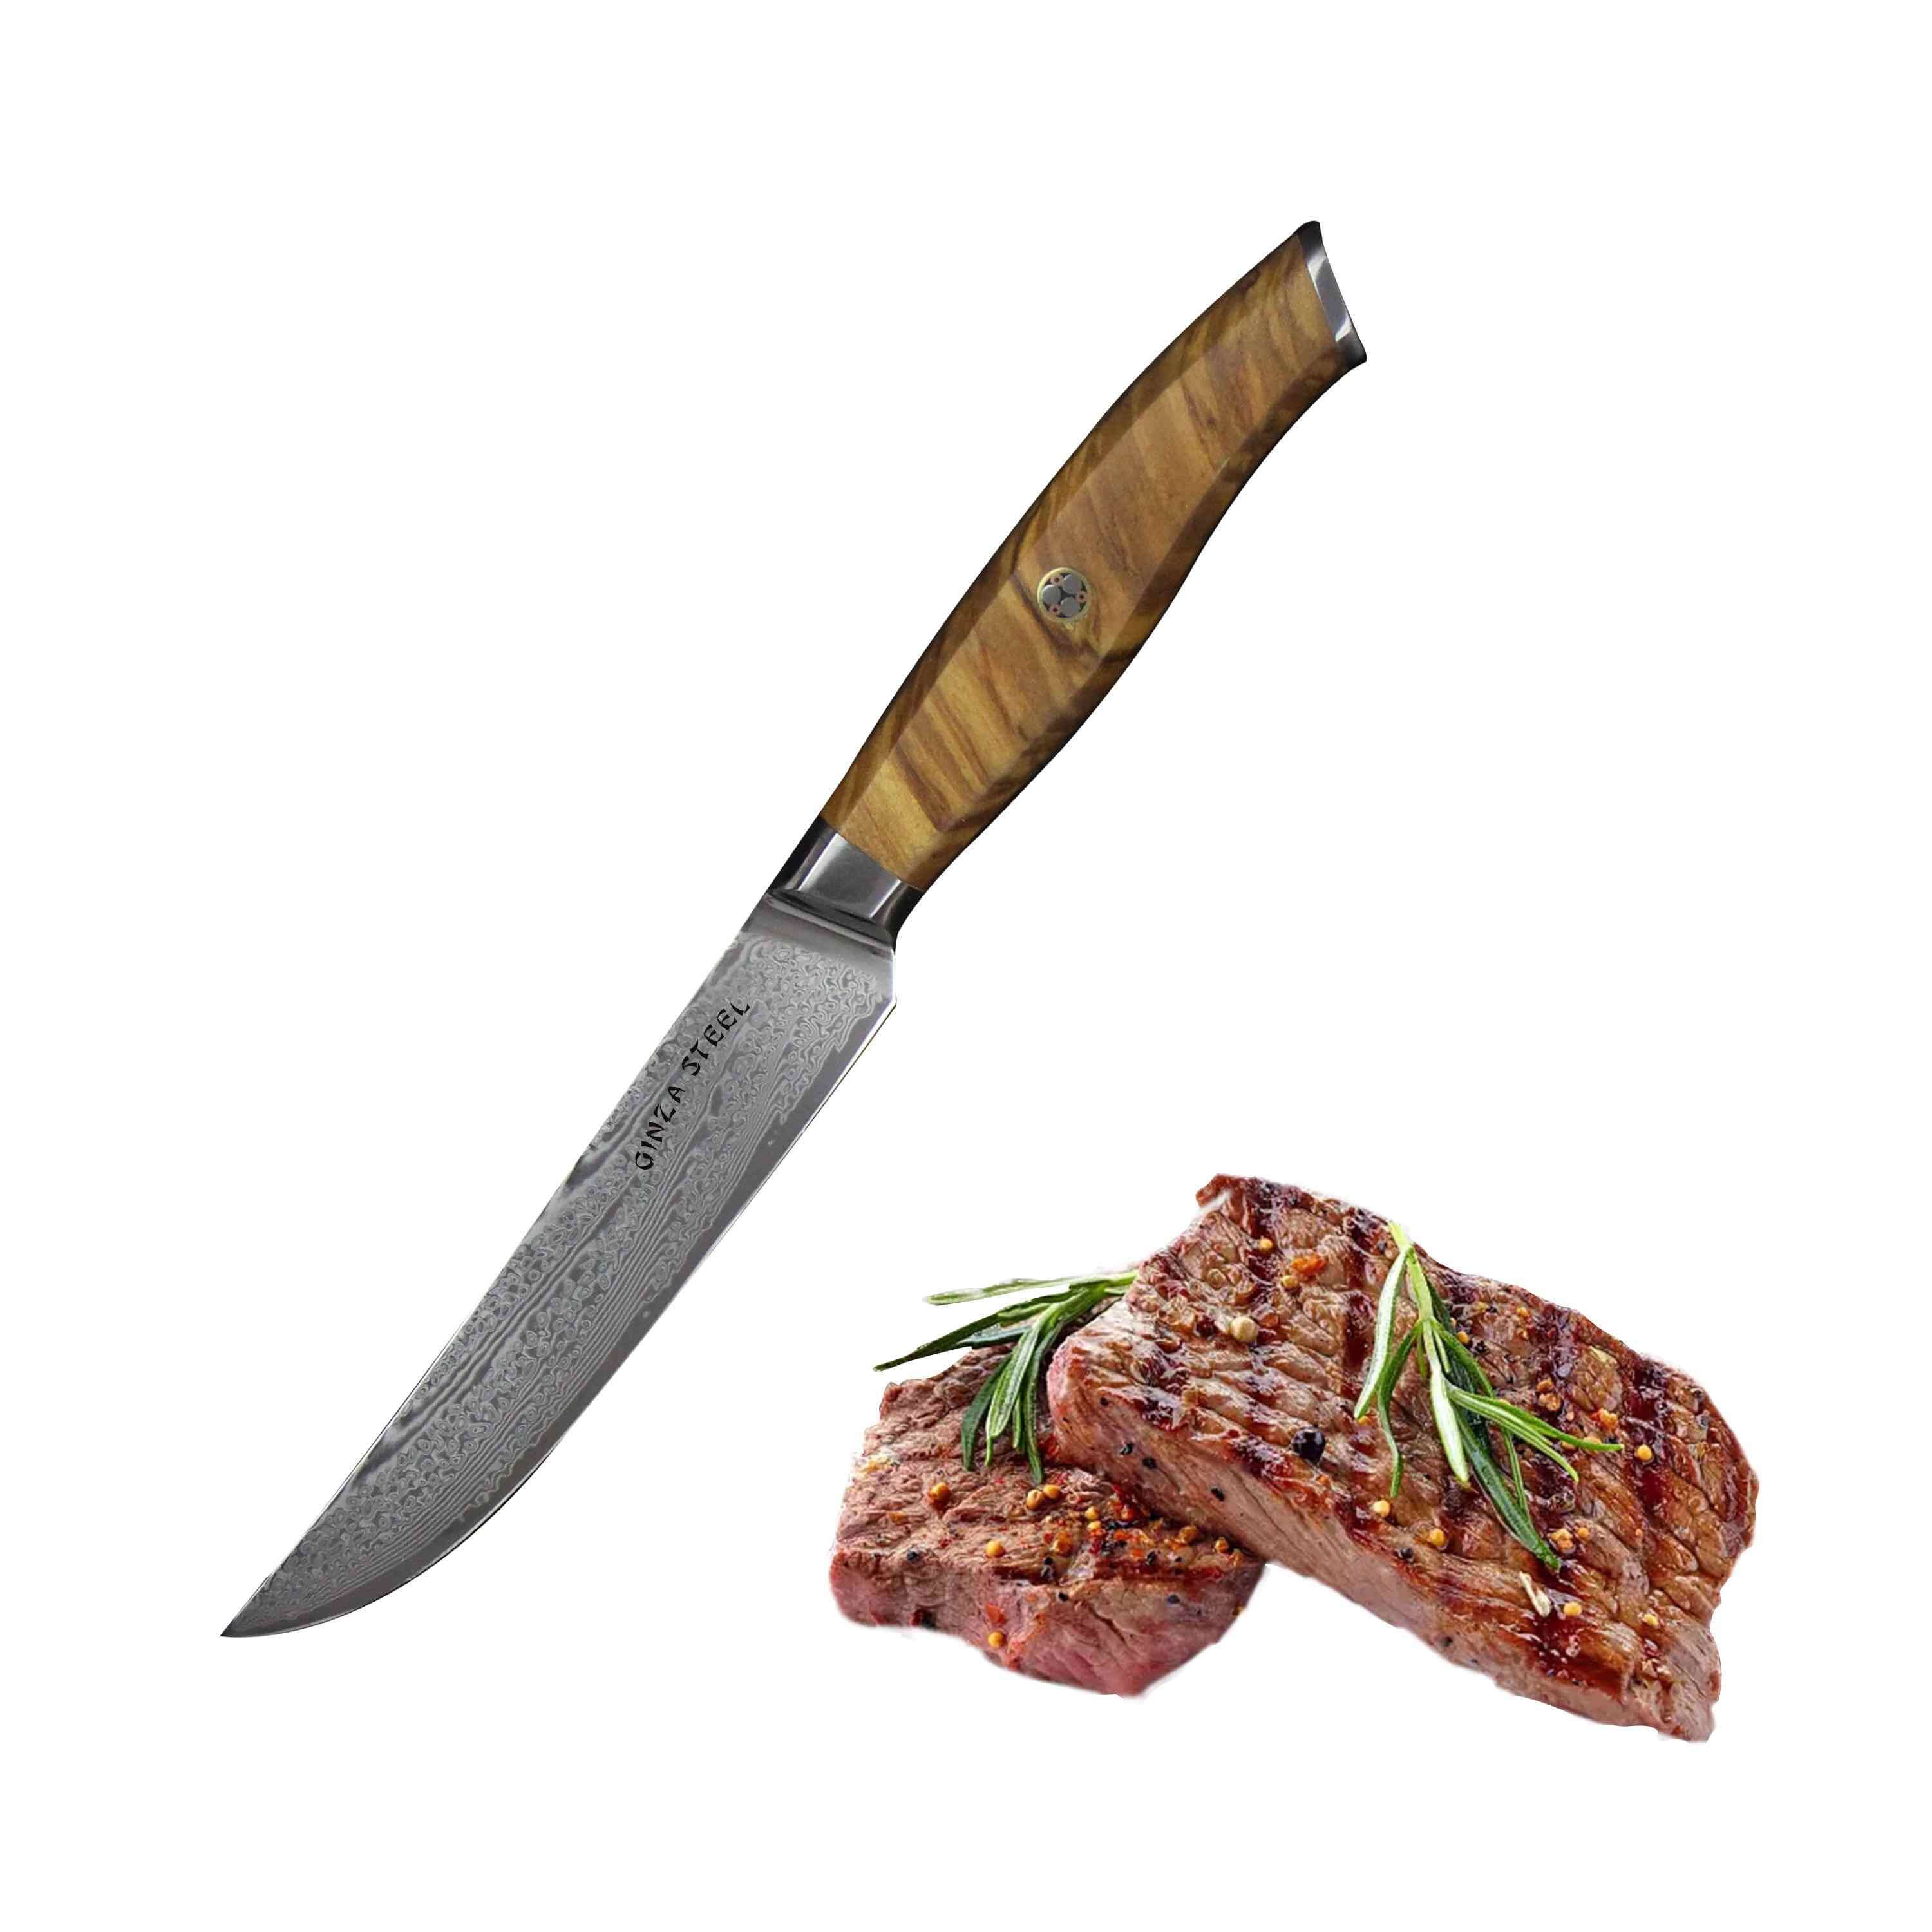 KC Series | AMELIA Essential VG10 Damascus Steel Steak Knife set of four